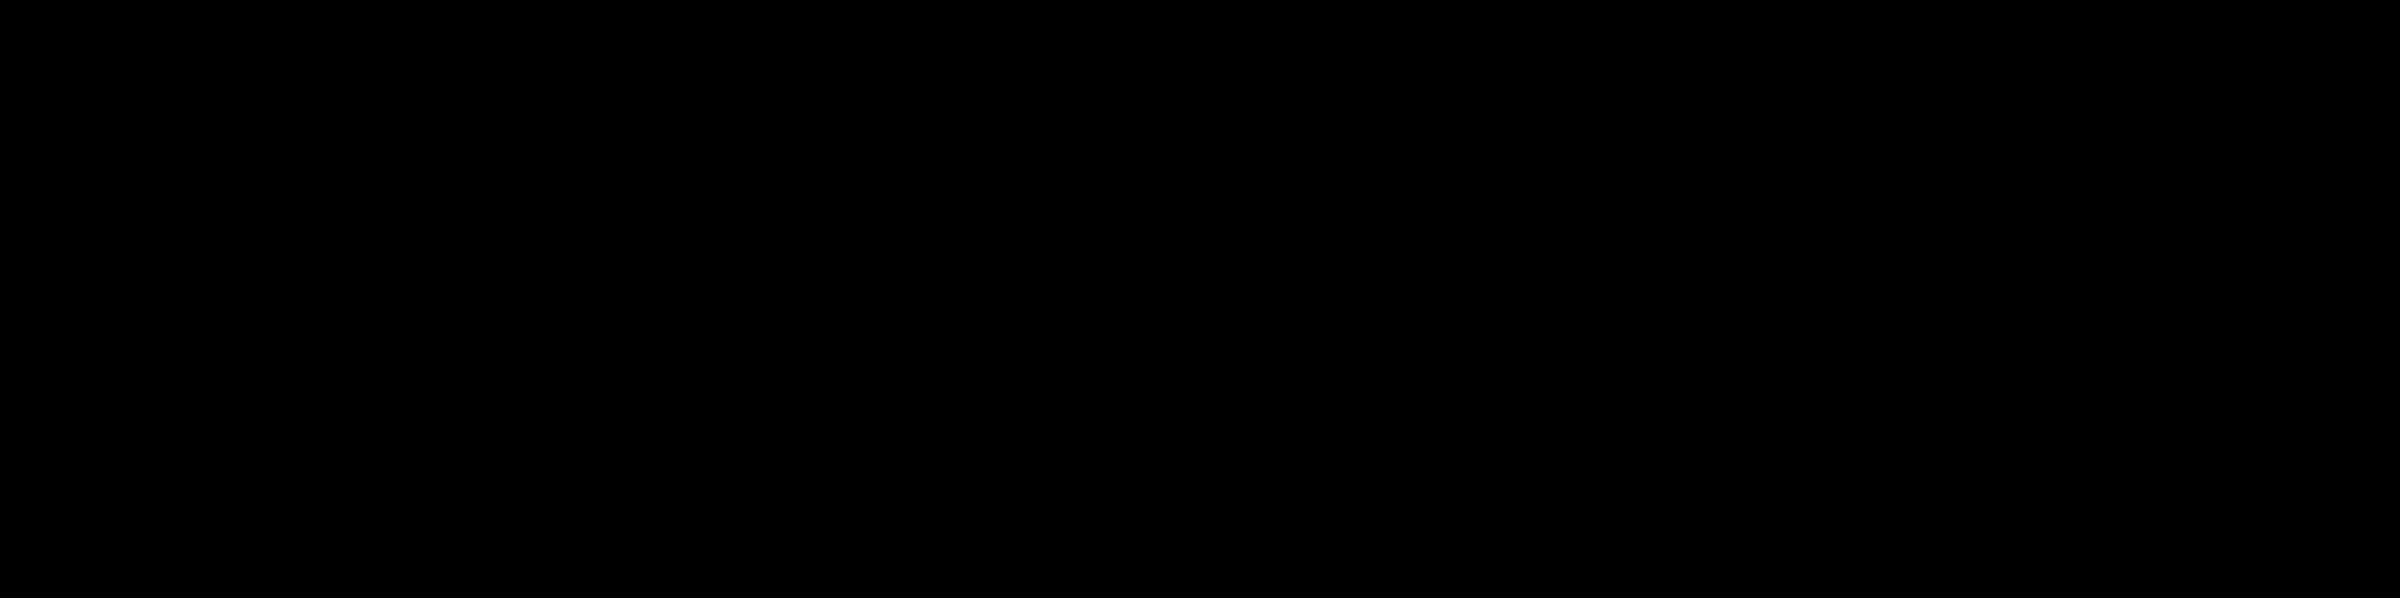 Espn Logo Png